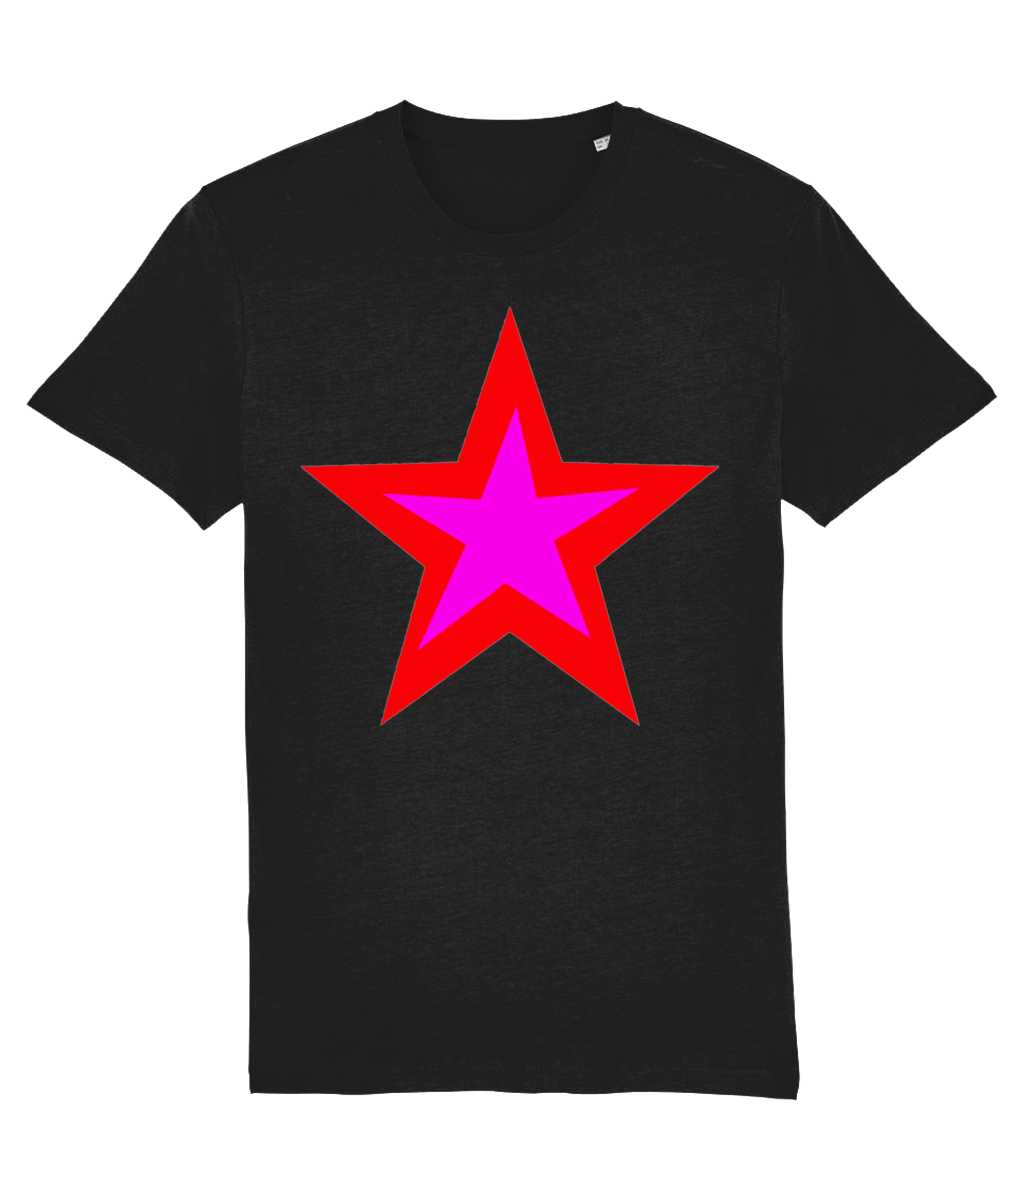 Star play organic T-shirt Cherchez La Femme brand